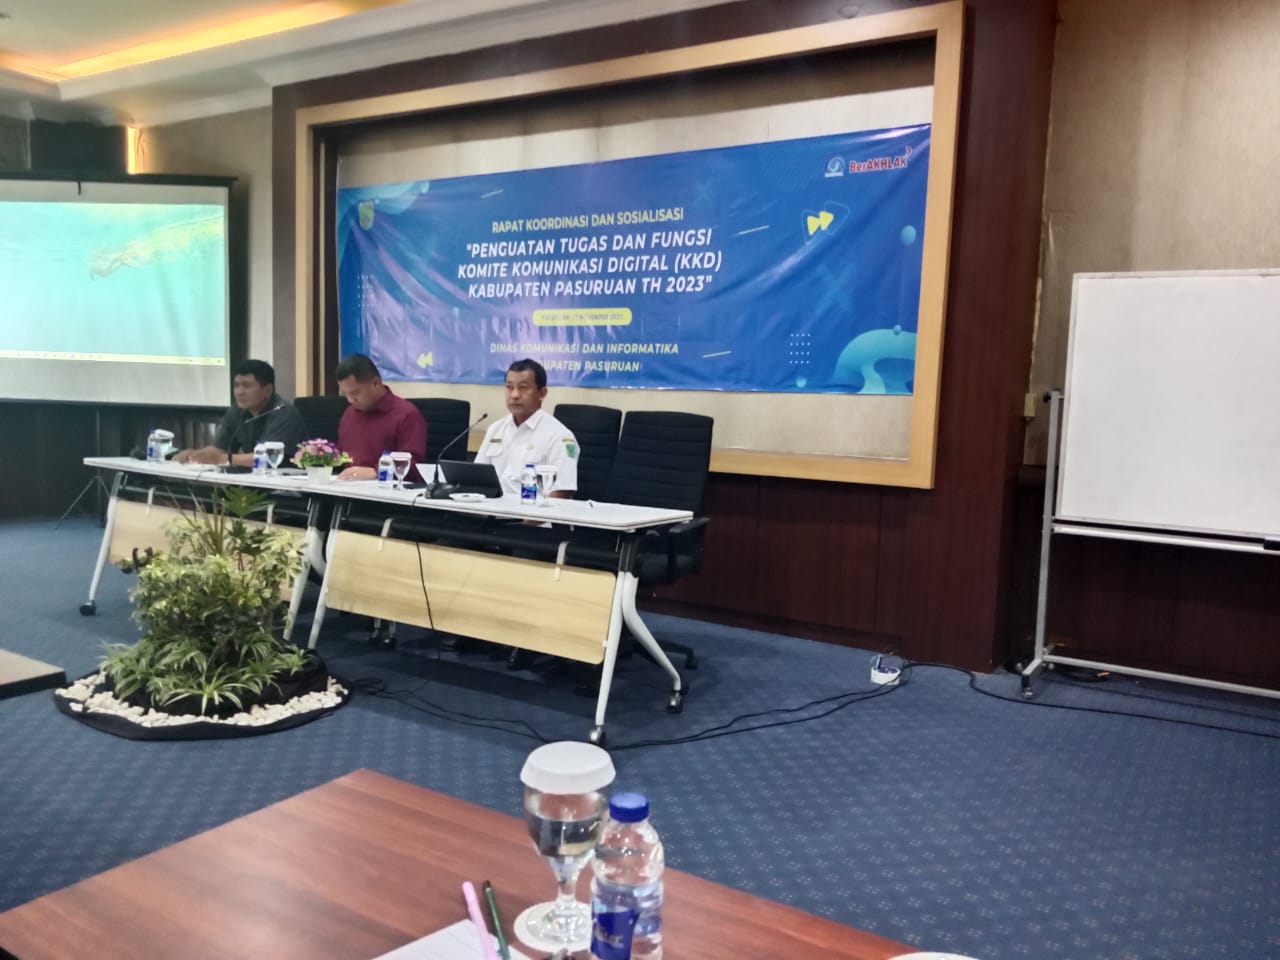 Rapat Koodinasi Dan Sosialisasi Penguatan Tugas Dan Fungsi Komite Komunikasi Digital (KKD) Kabupaten Pasuruan 2023